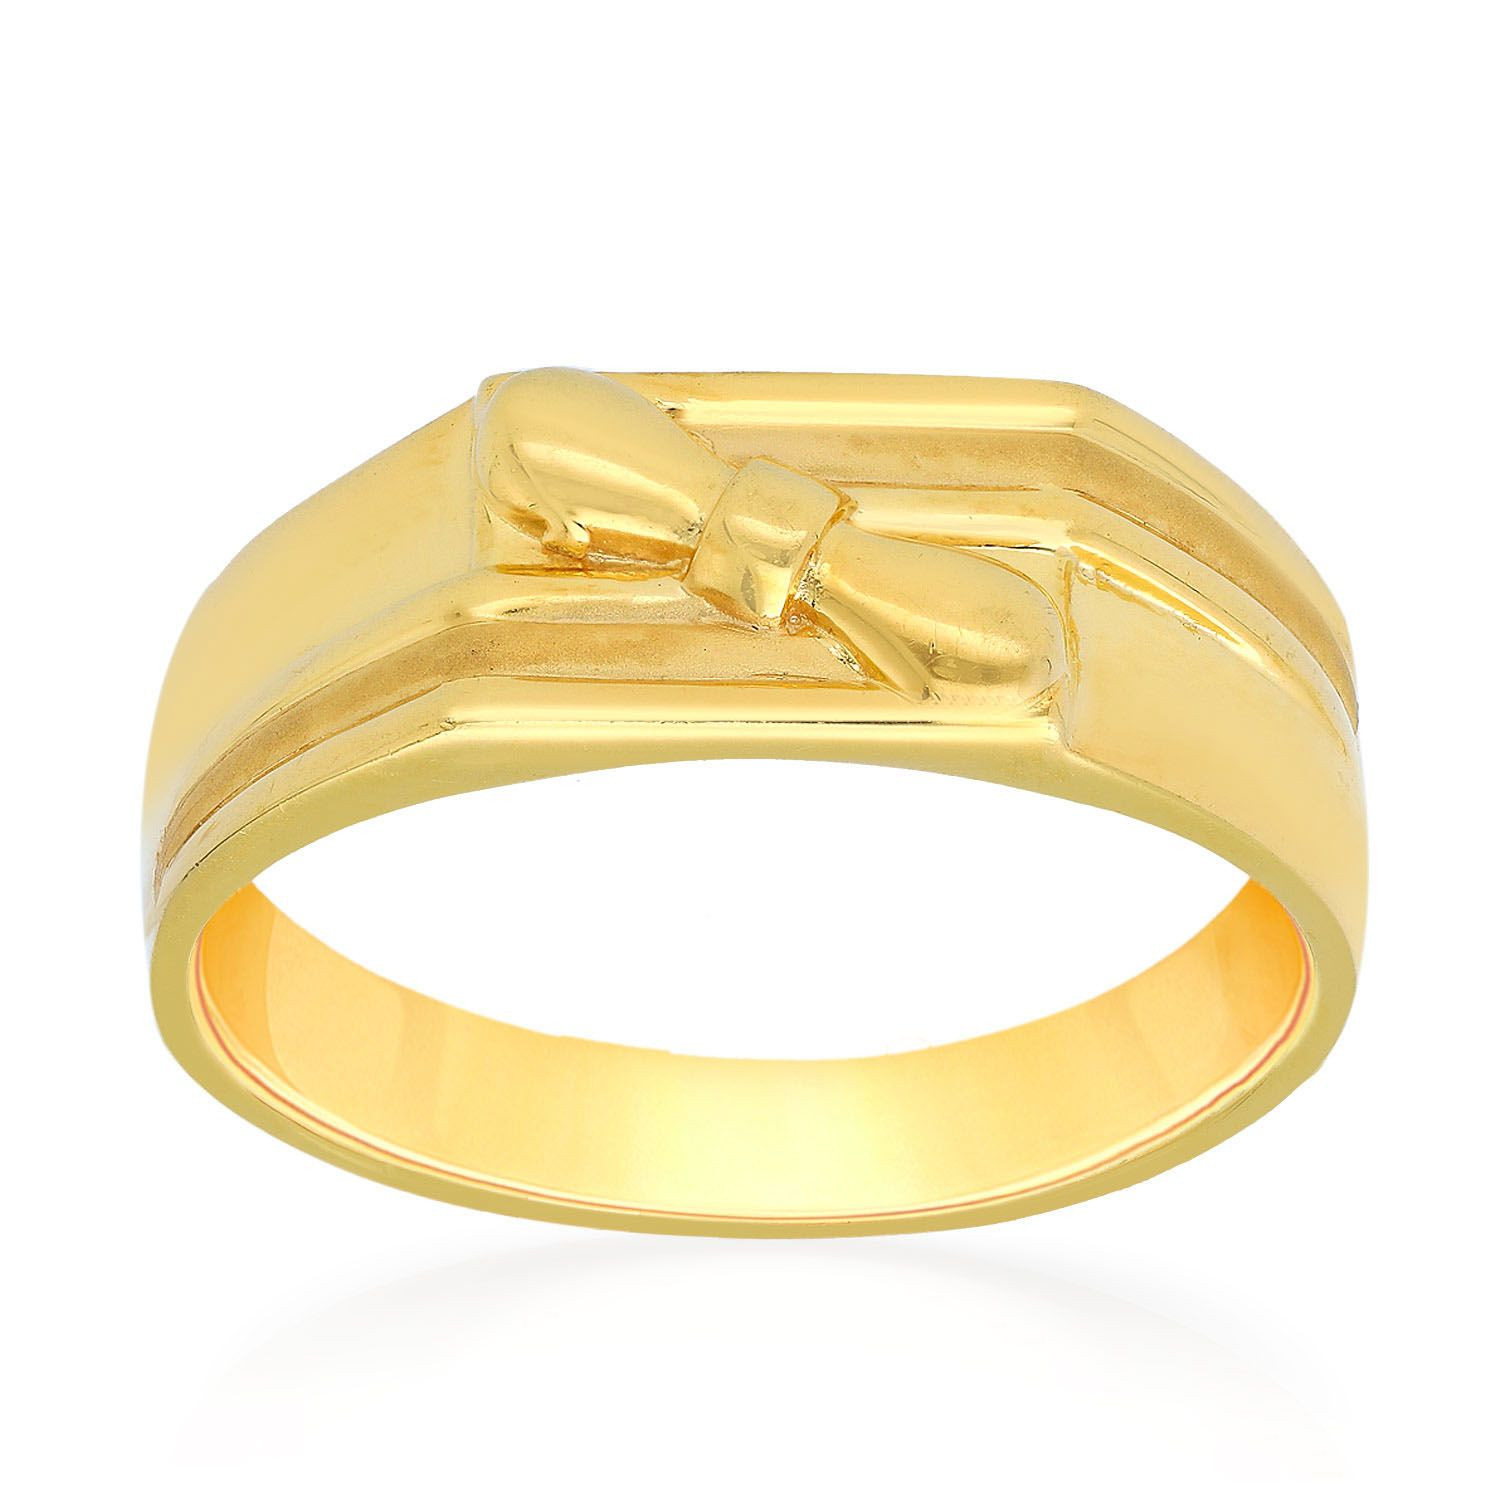 Malabar 22 KT Gold Studded Ring For Men FRGEDZRURGW737